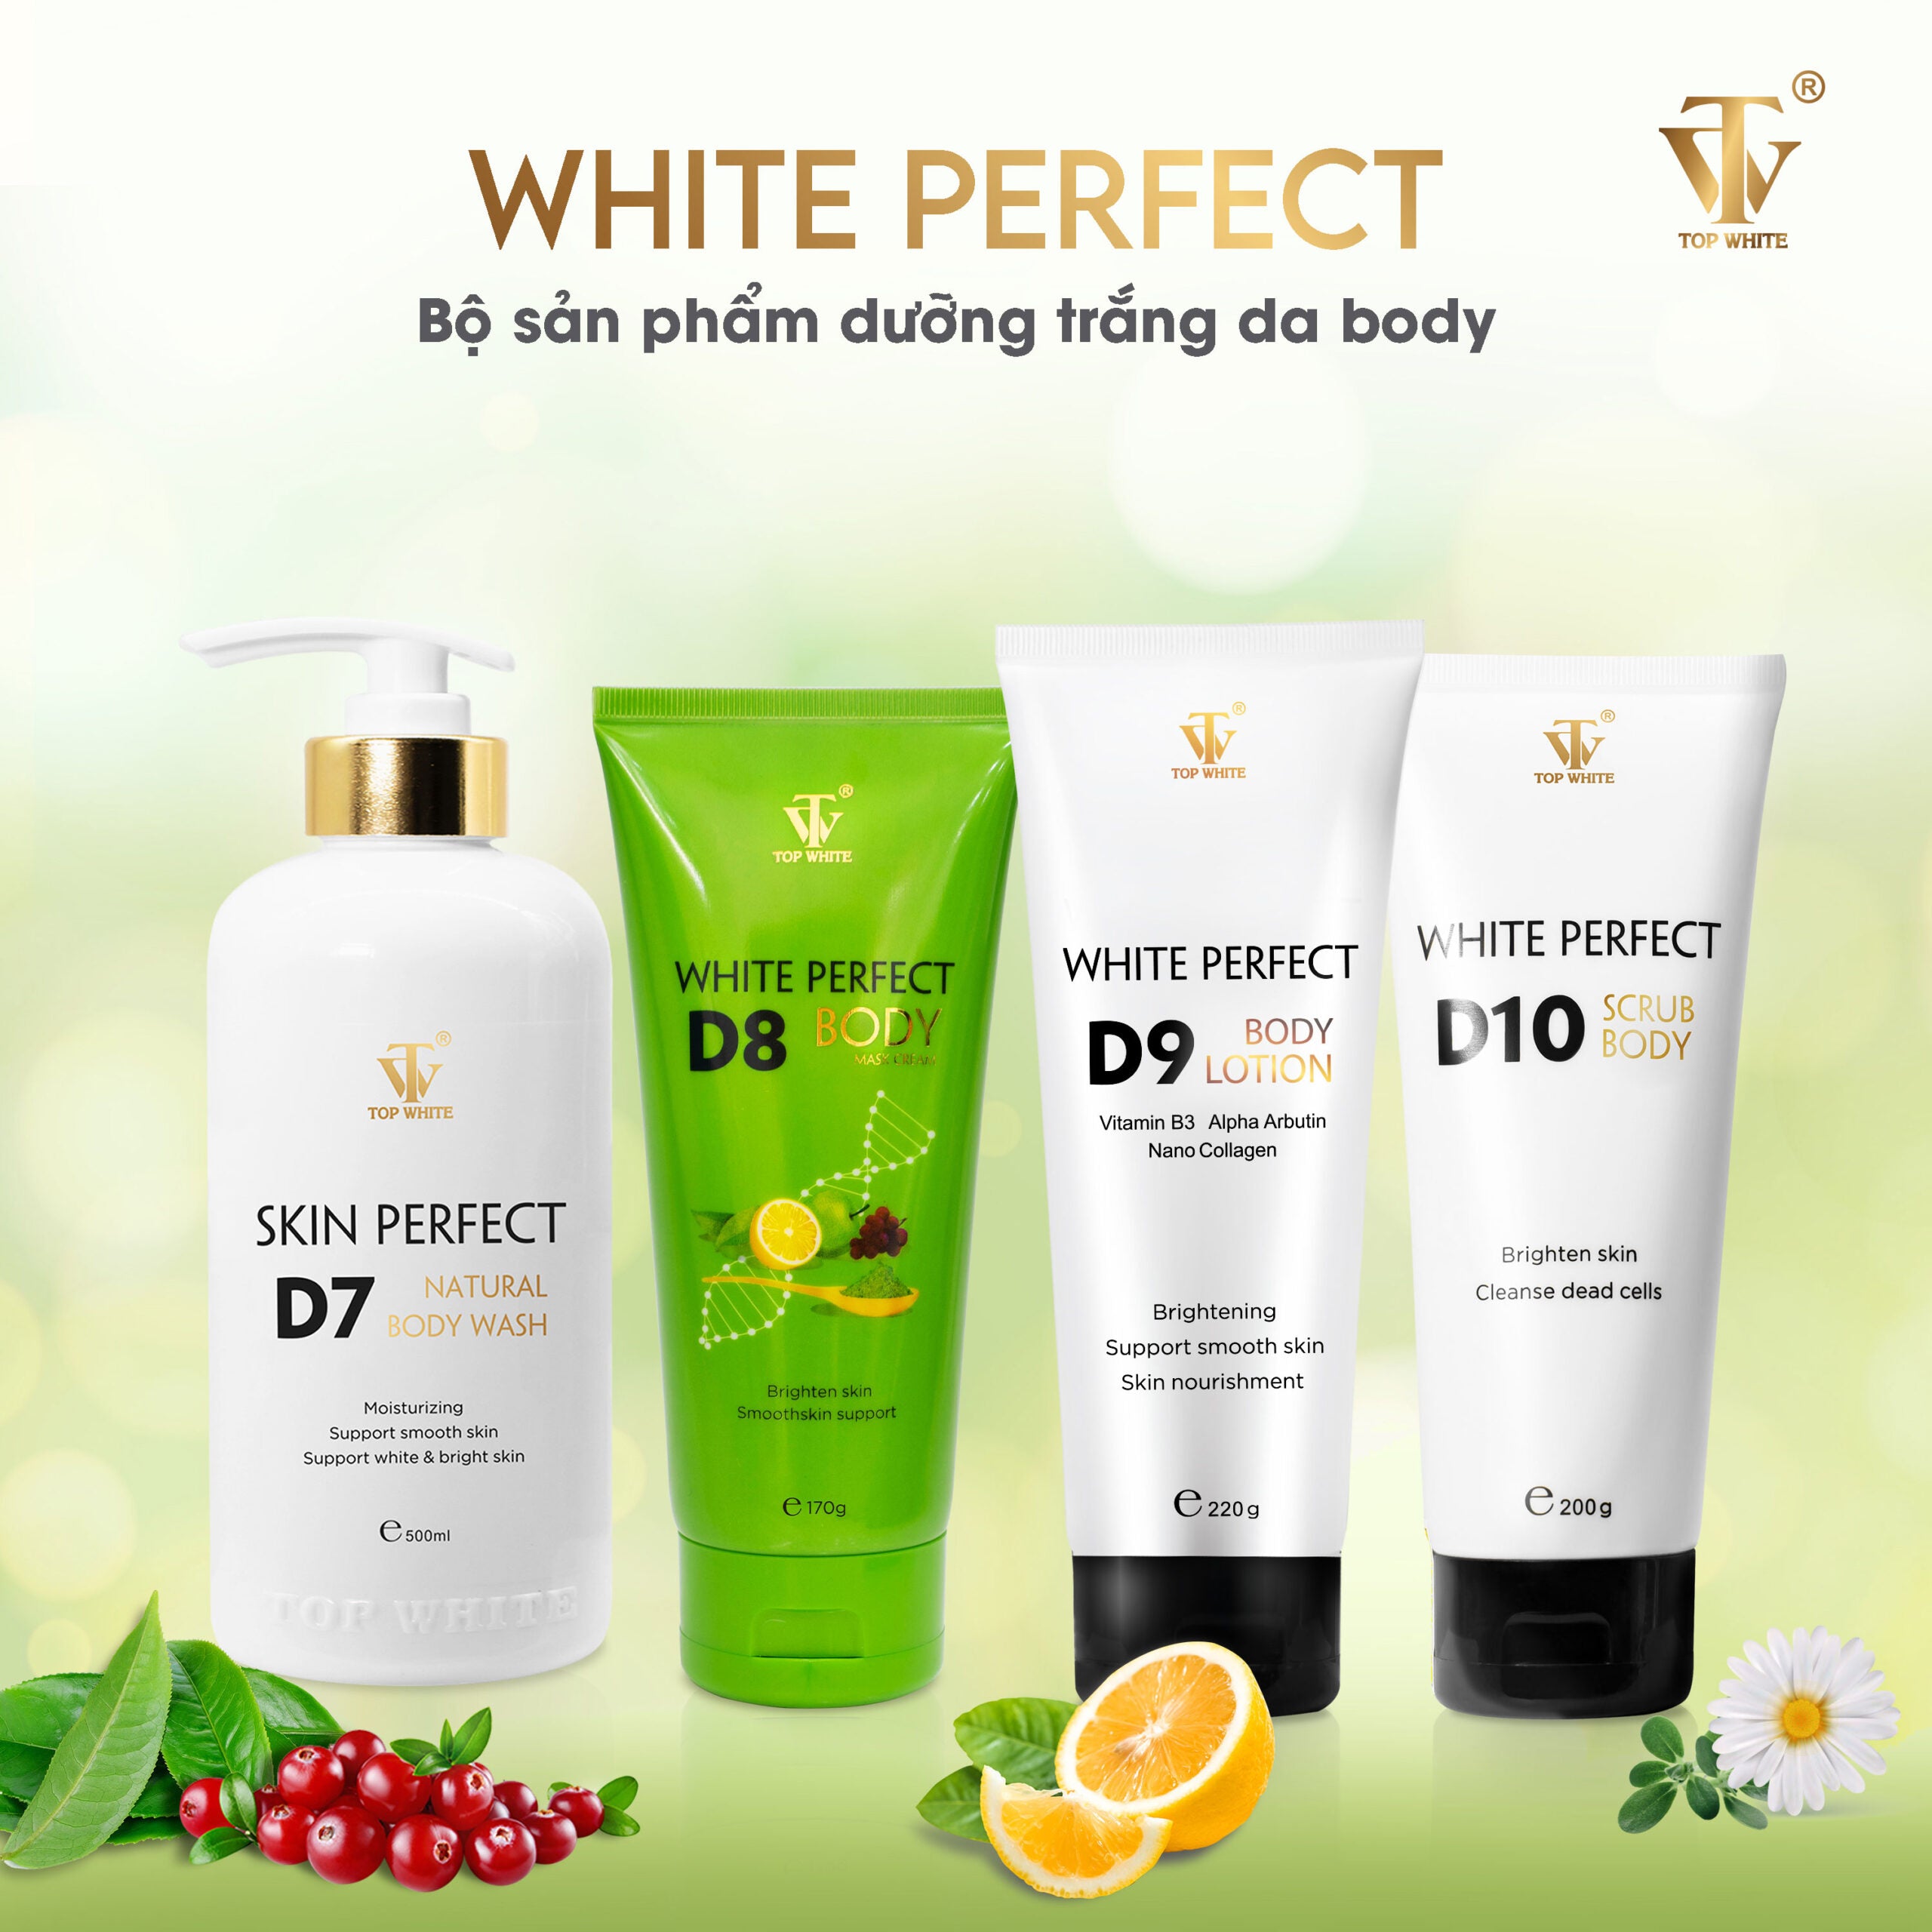 Top White Complete Body Whitening Kit